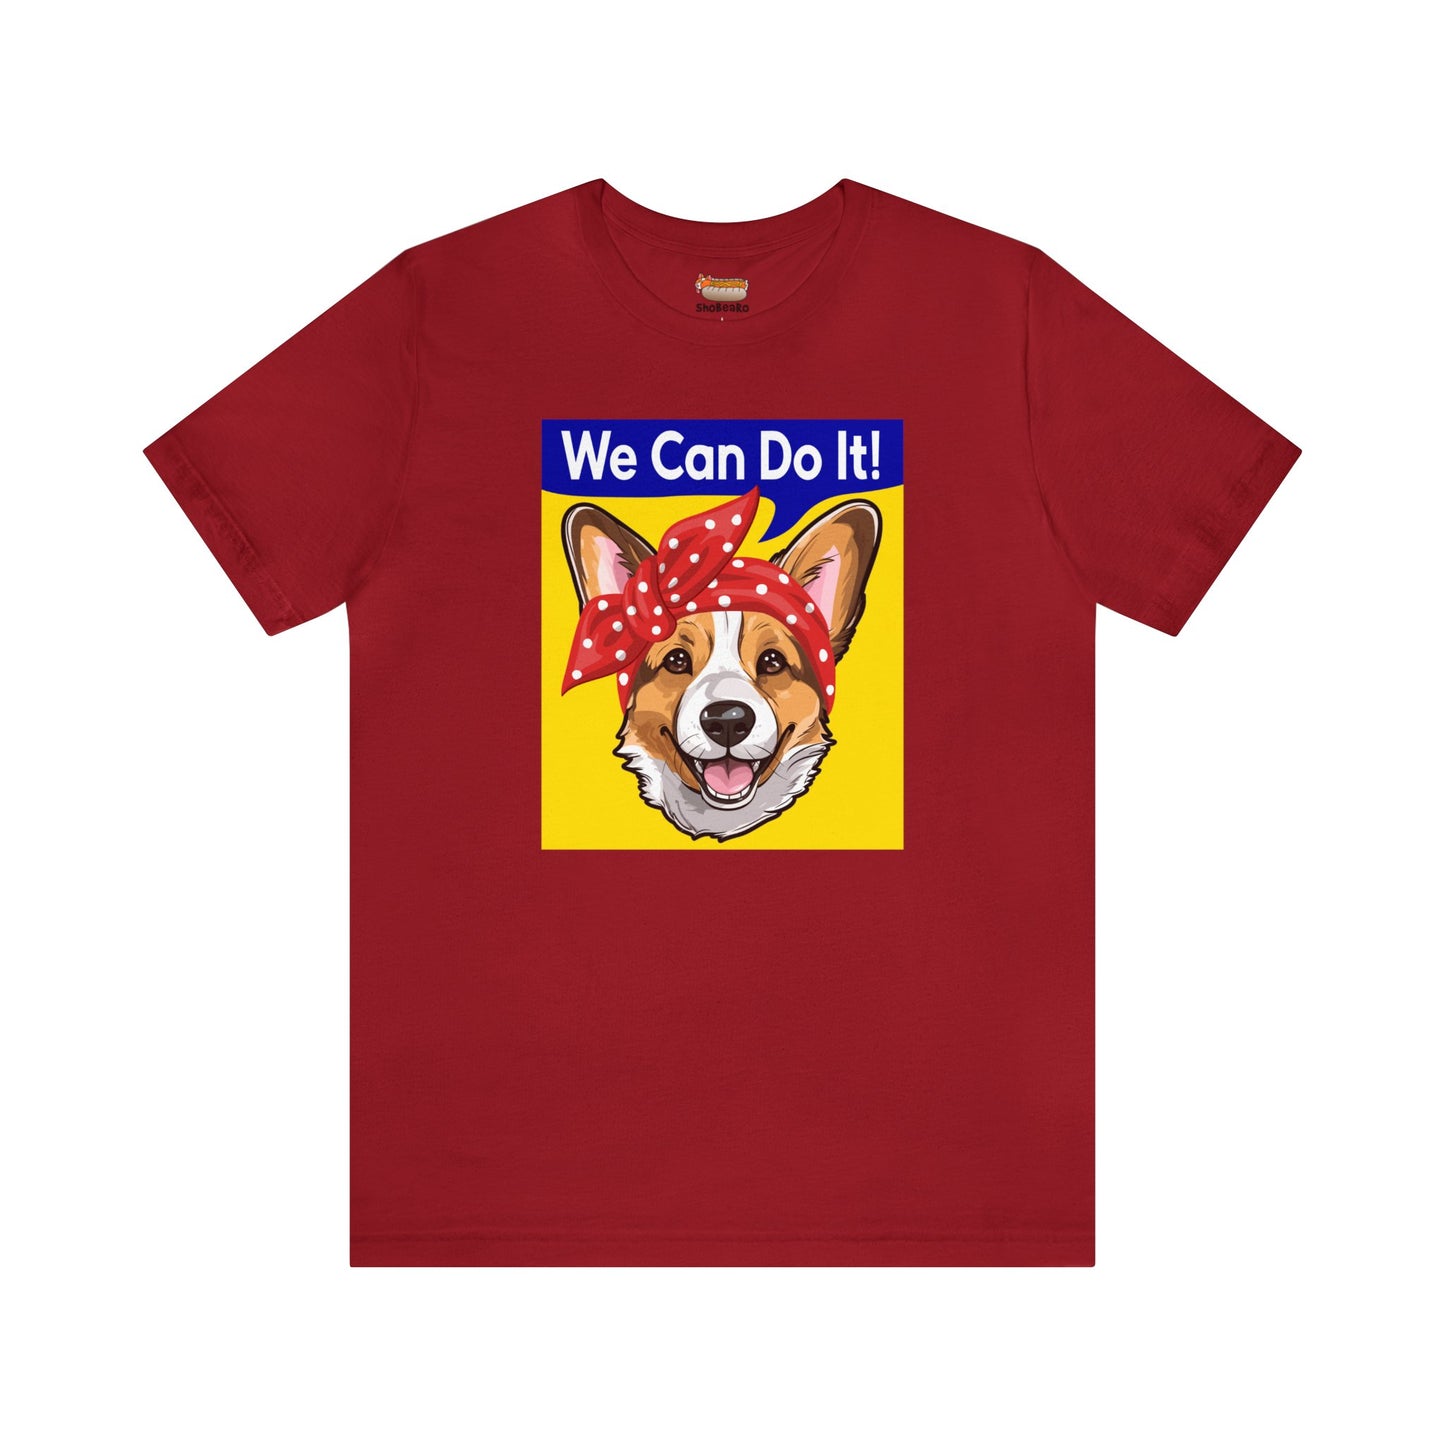 red corgi t-shirt rosie the riveter women's rights shirt gift for her dog lover